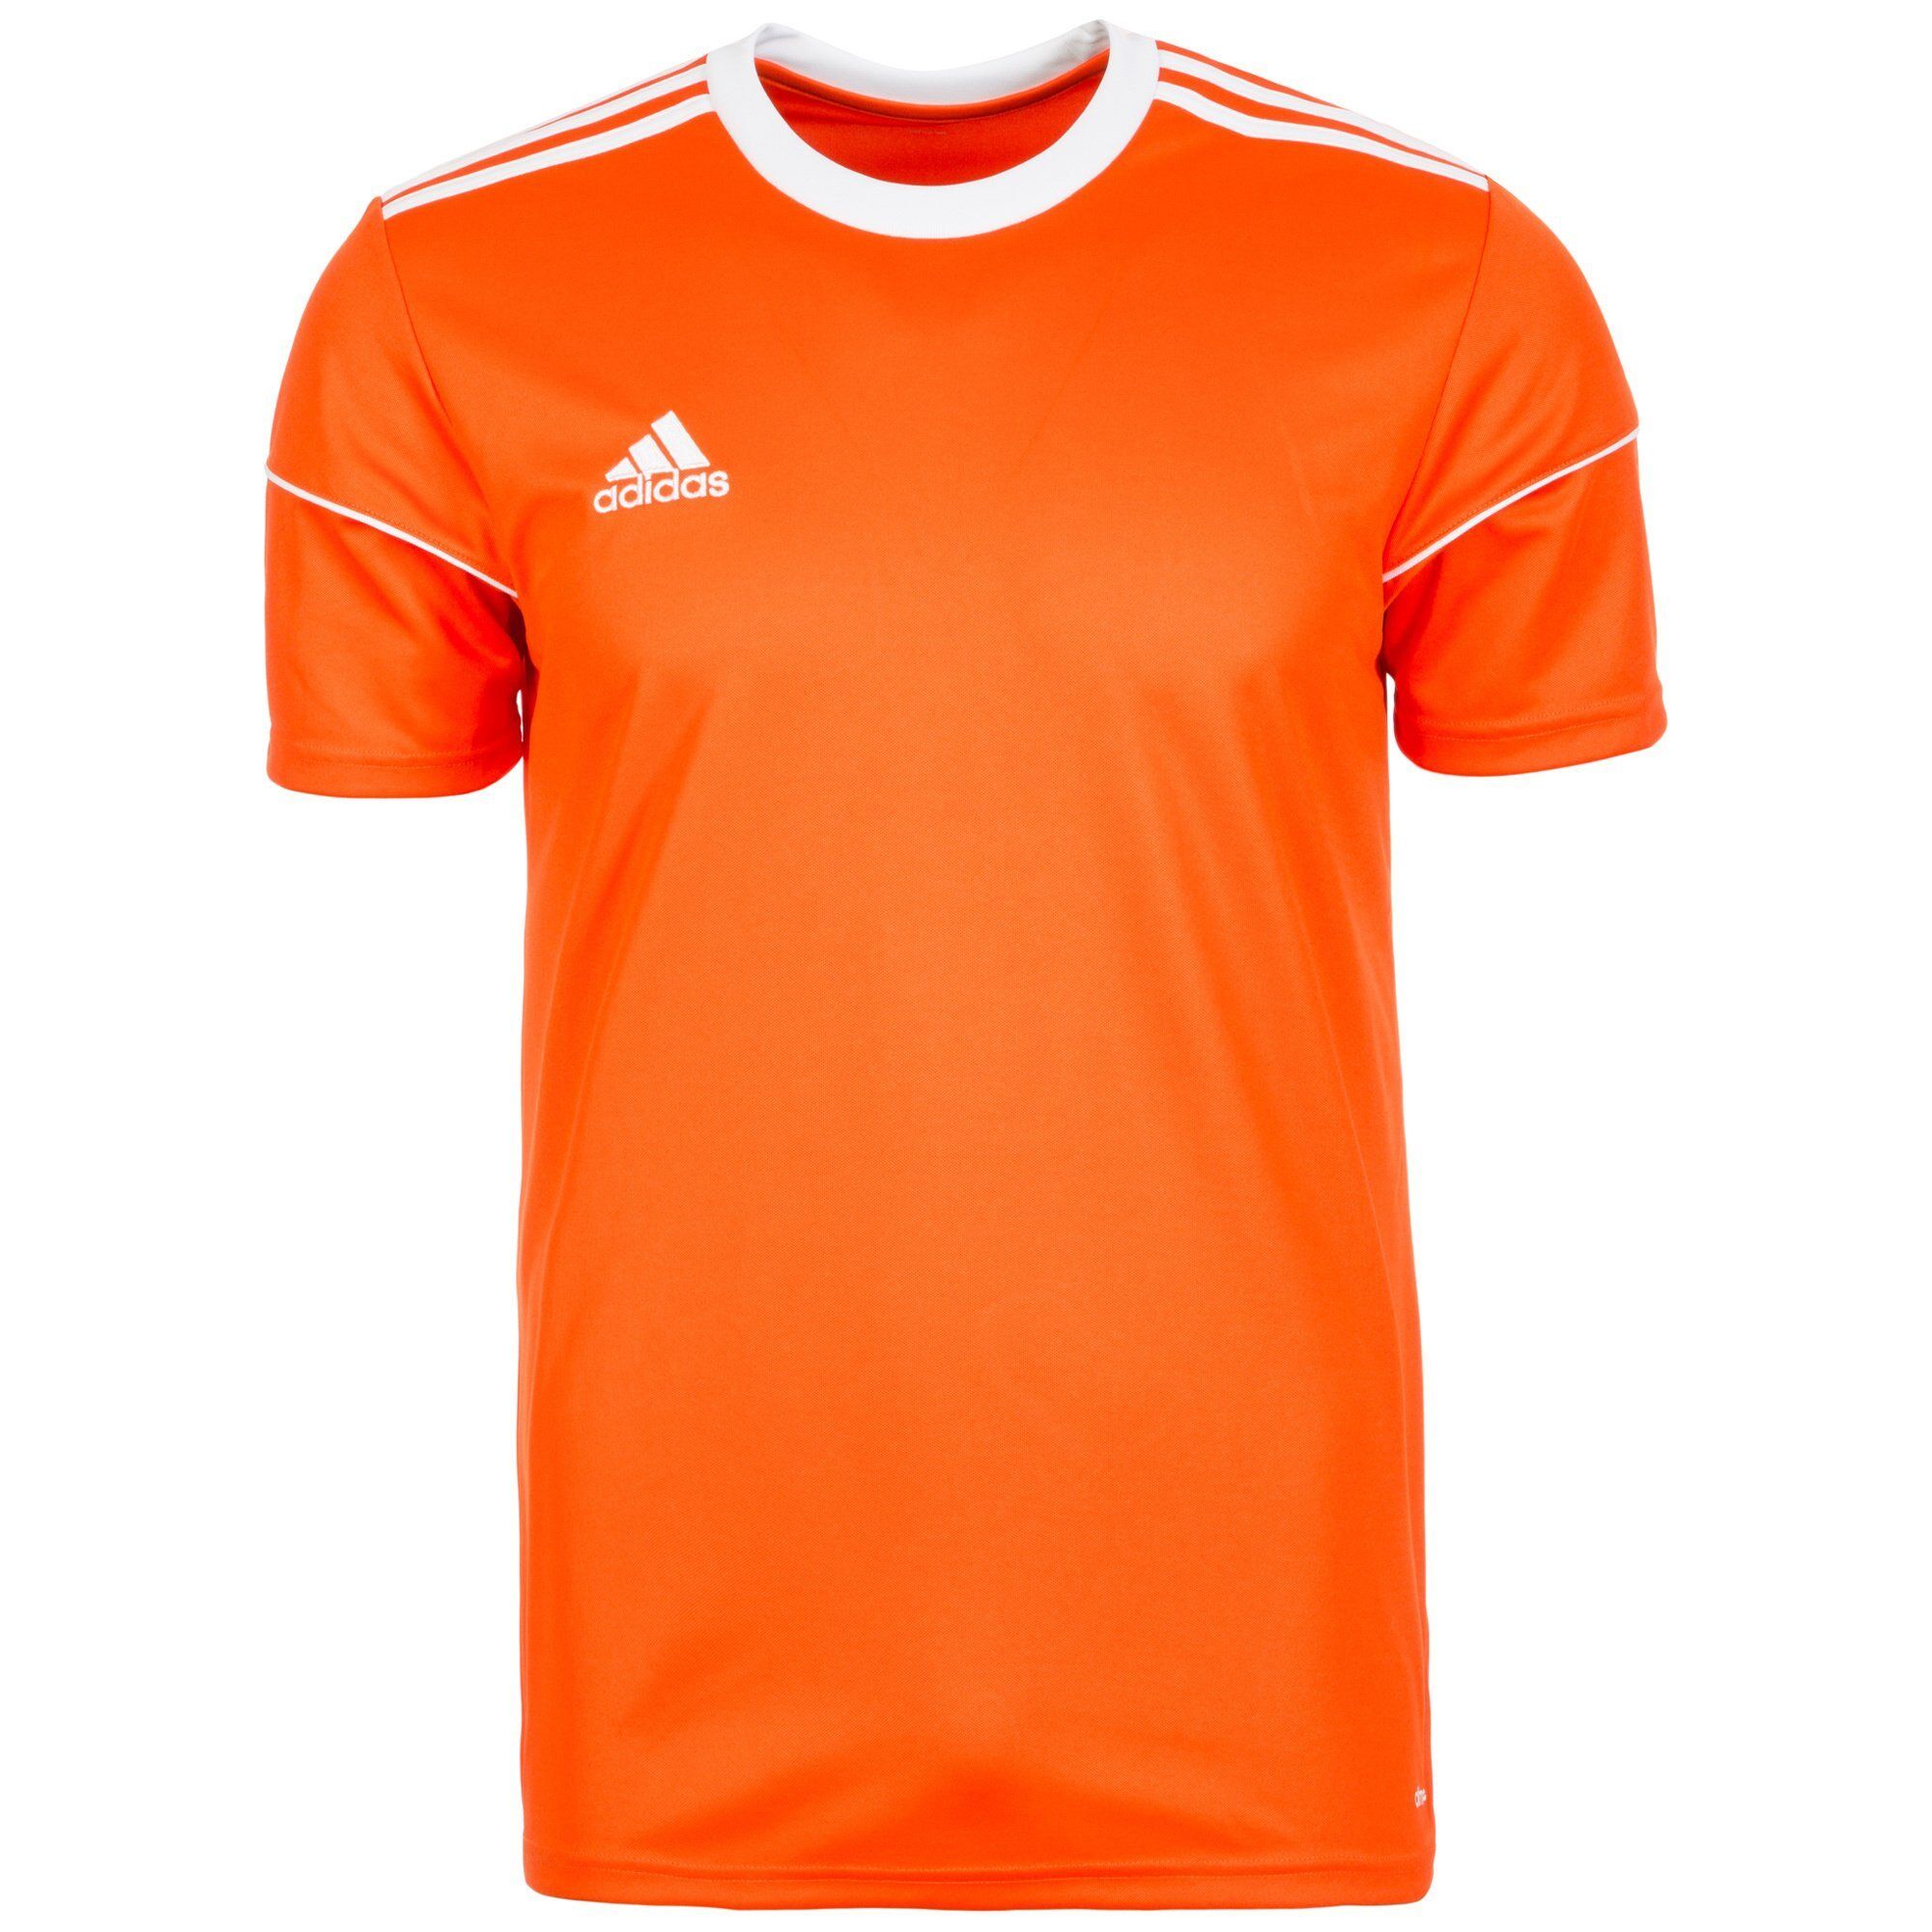 Adidas Performance Fußballtrikot »Squadra 17«, orange-weiß